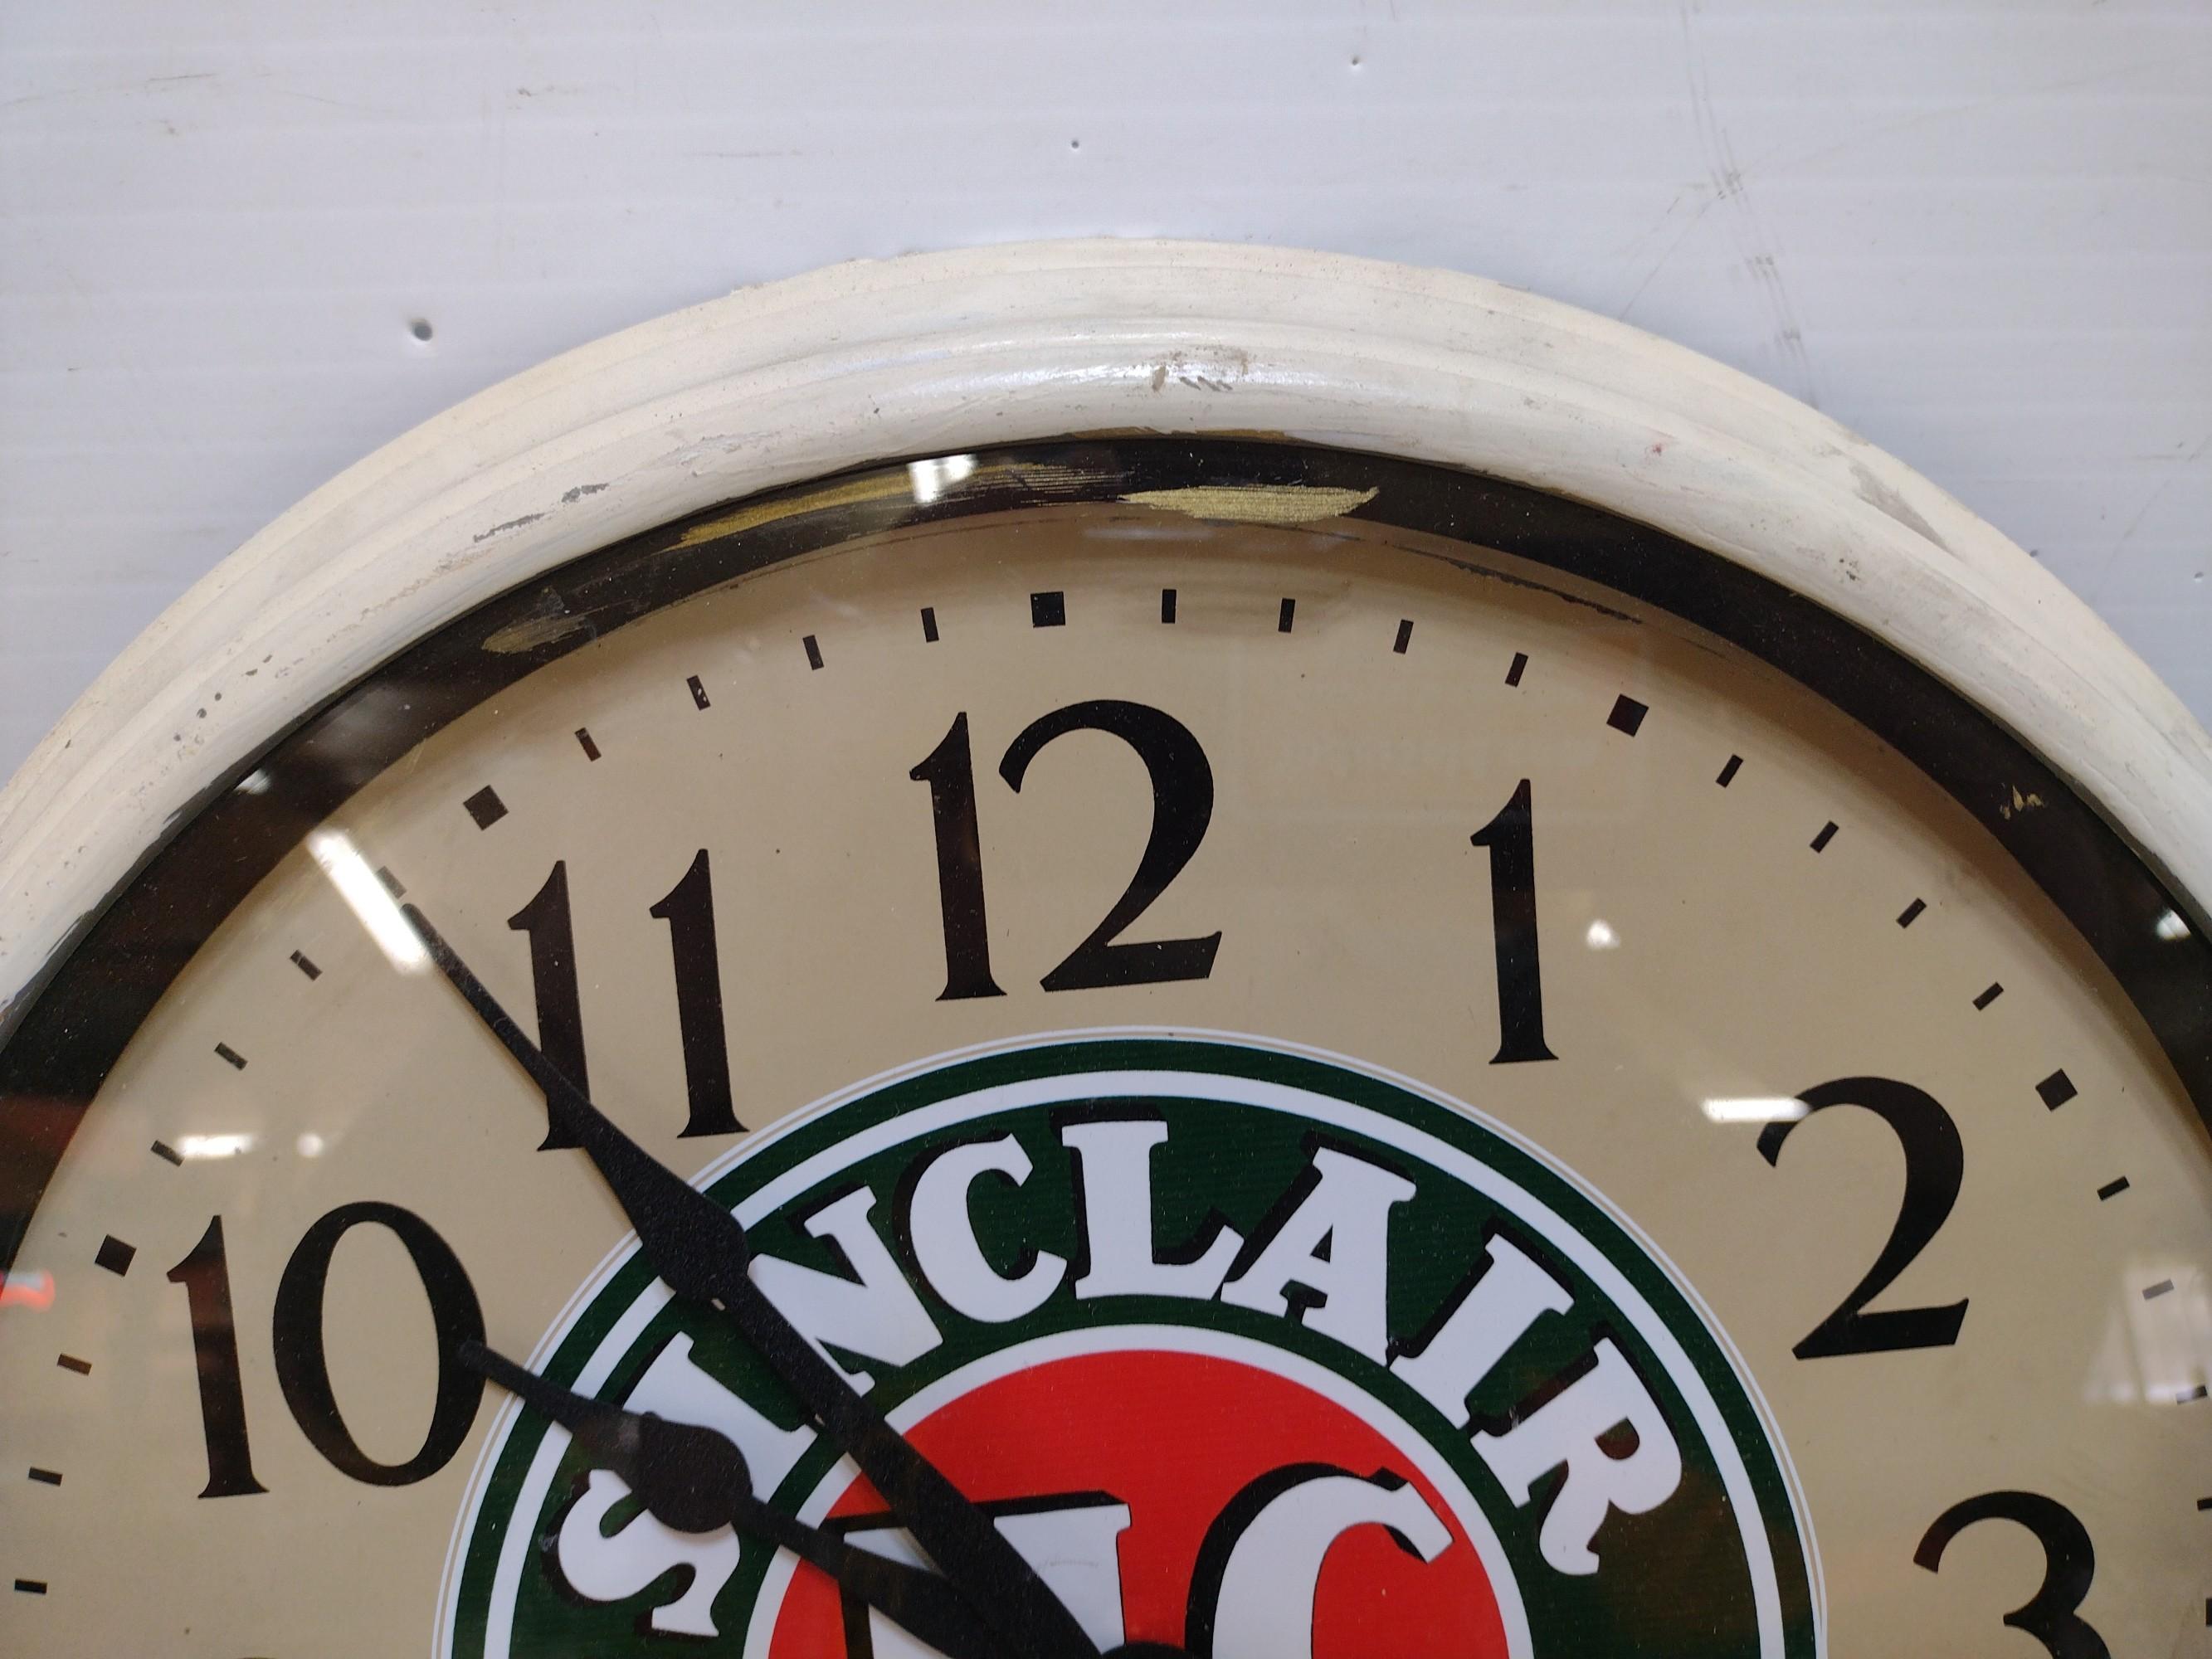 Sinclair Gasoline DC Advertising Clock